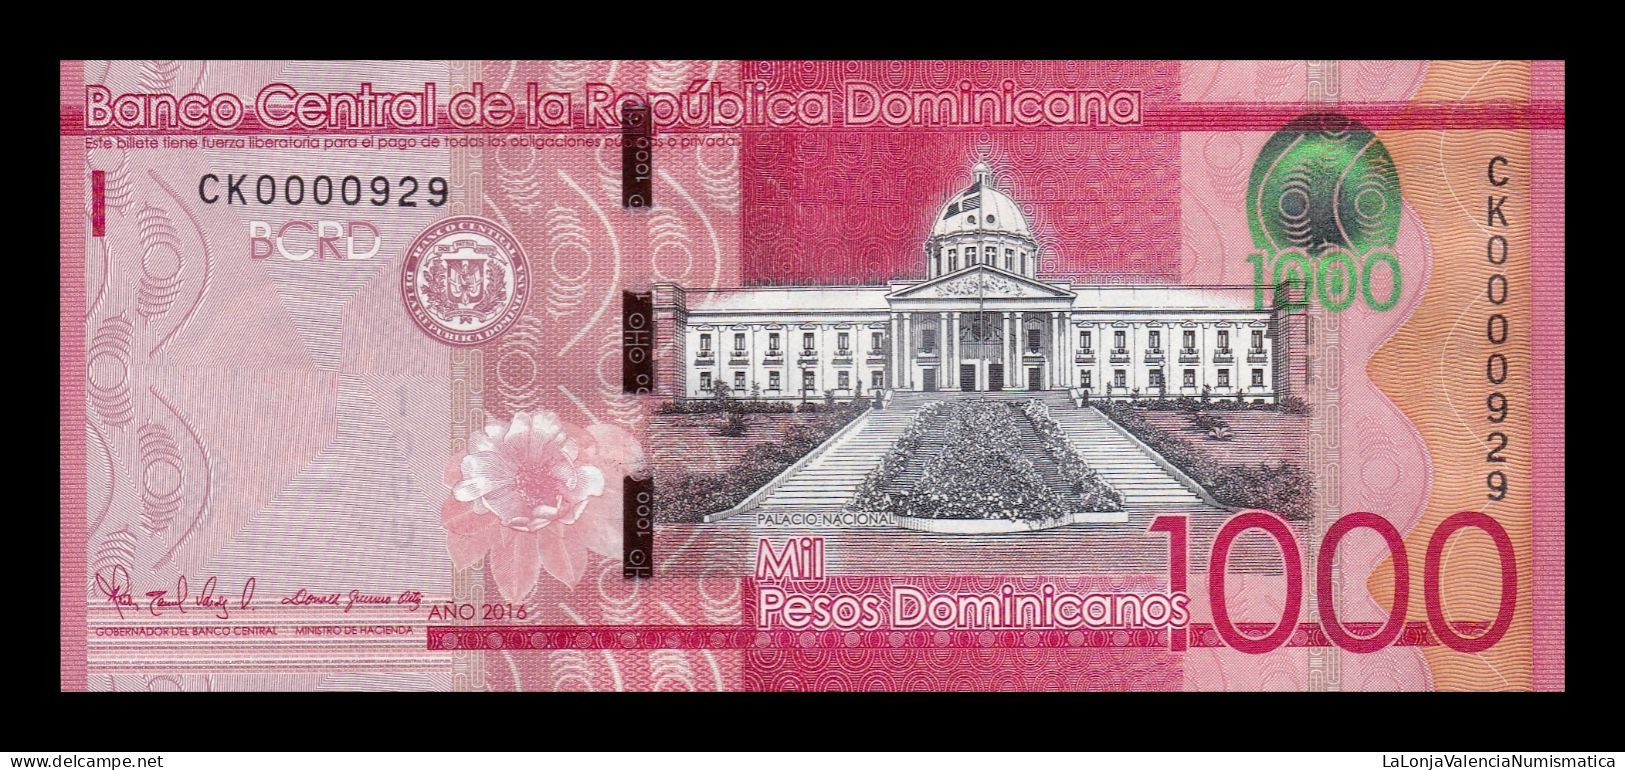 República Dominicana 1000 Pesos Dominicanos 2016 Pick 193c Low Serial 929 Sc Unc - Dominicana